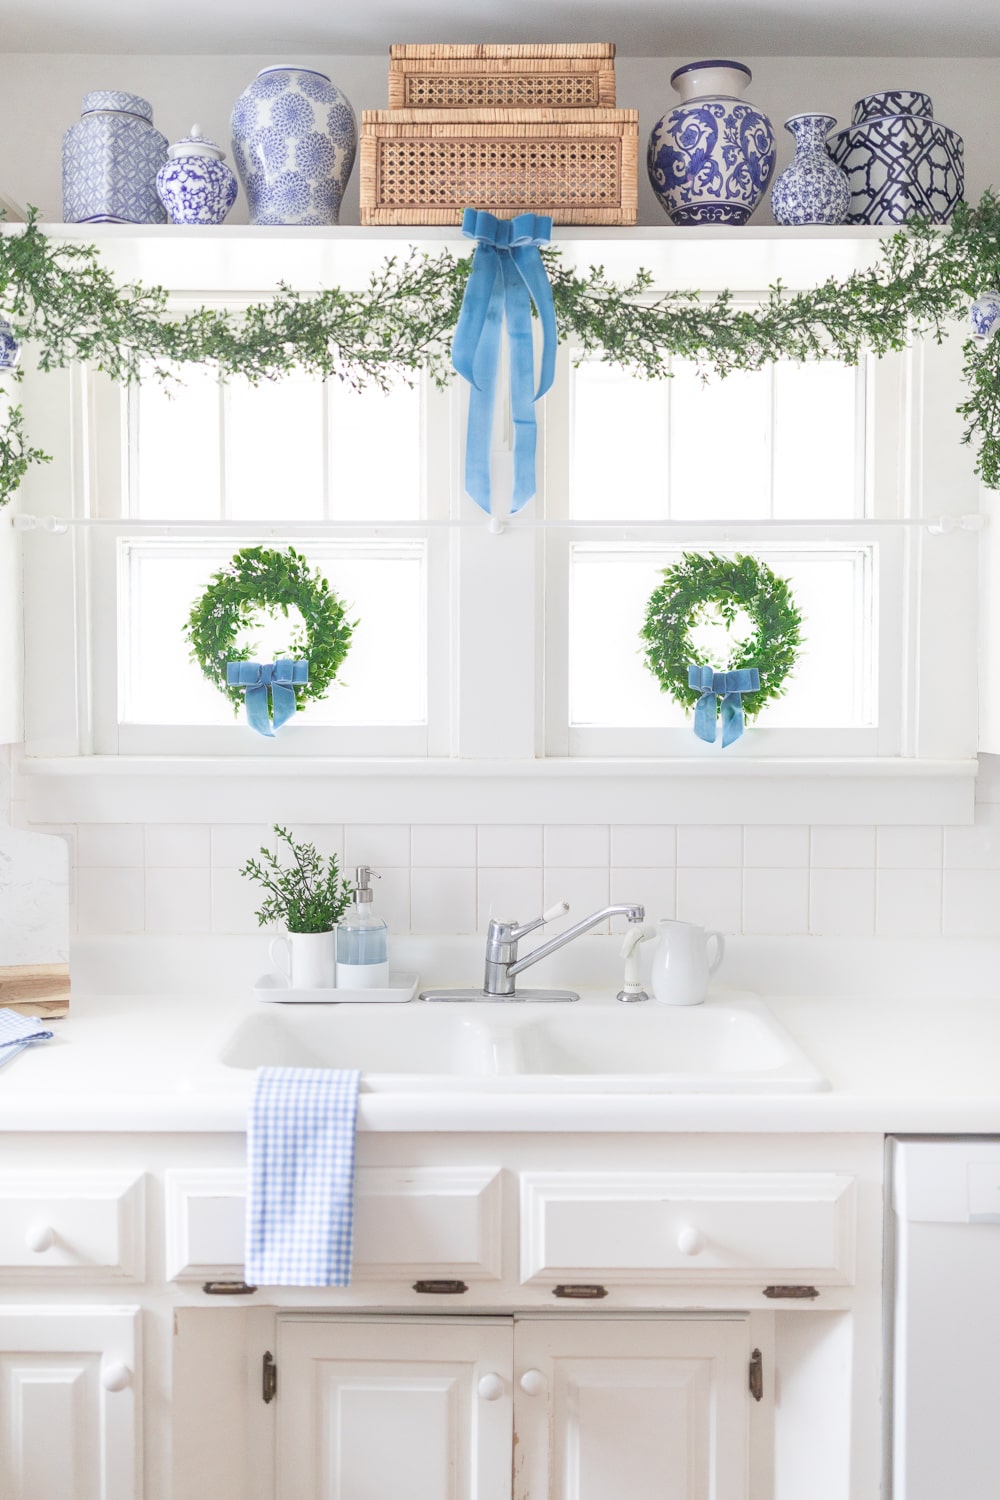 Southern lifestyle blogger Stephanie Ziajka shares coastal kitchen decorating ideas for winter on Diary of a Debutante